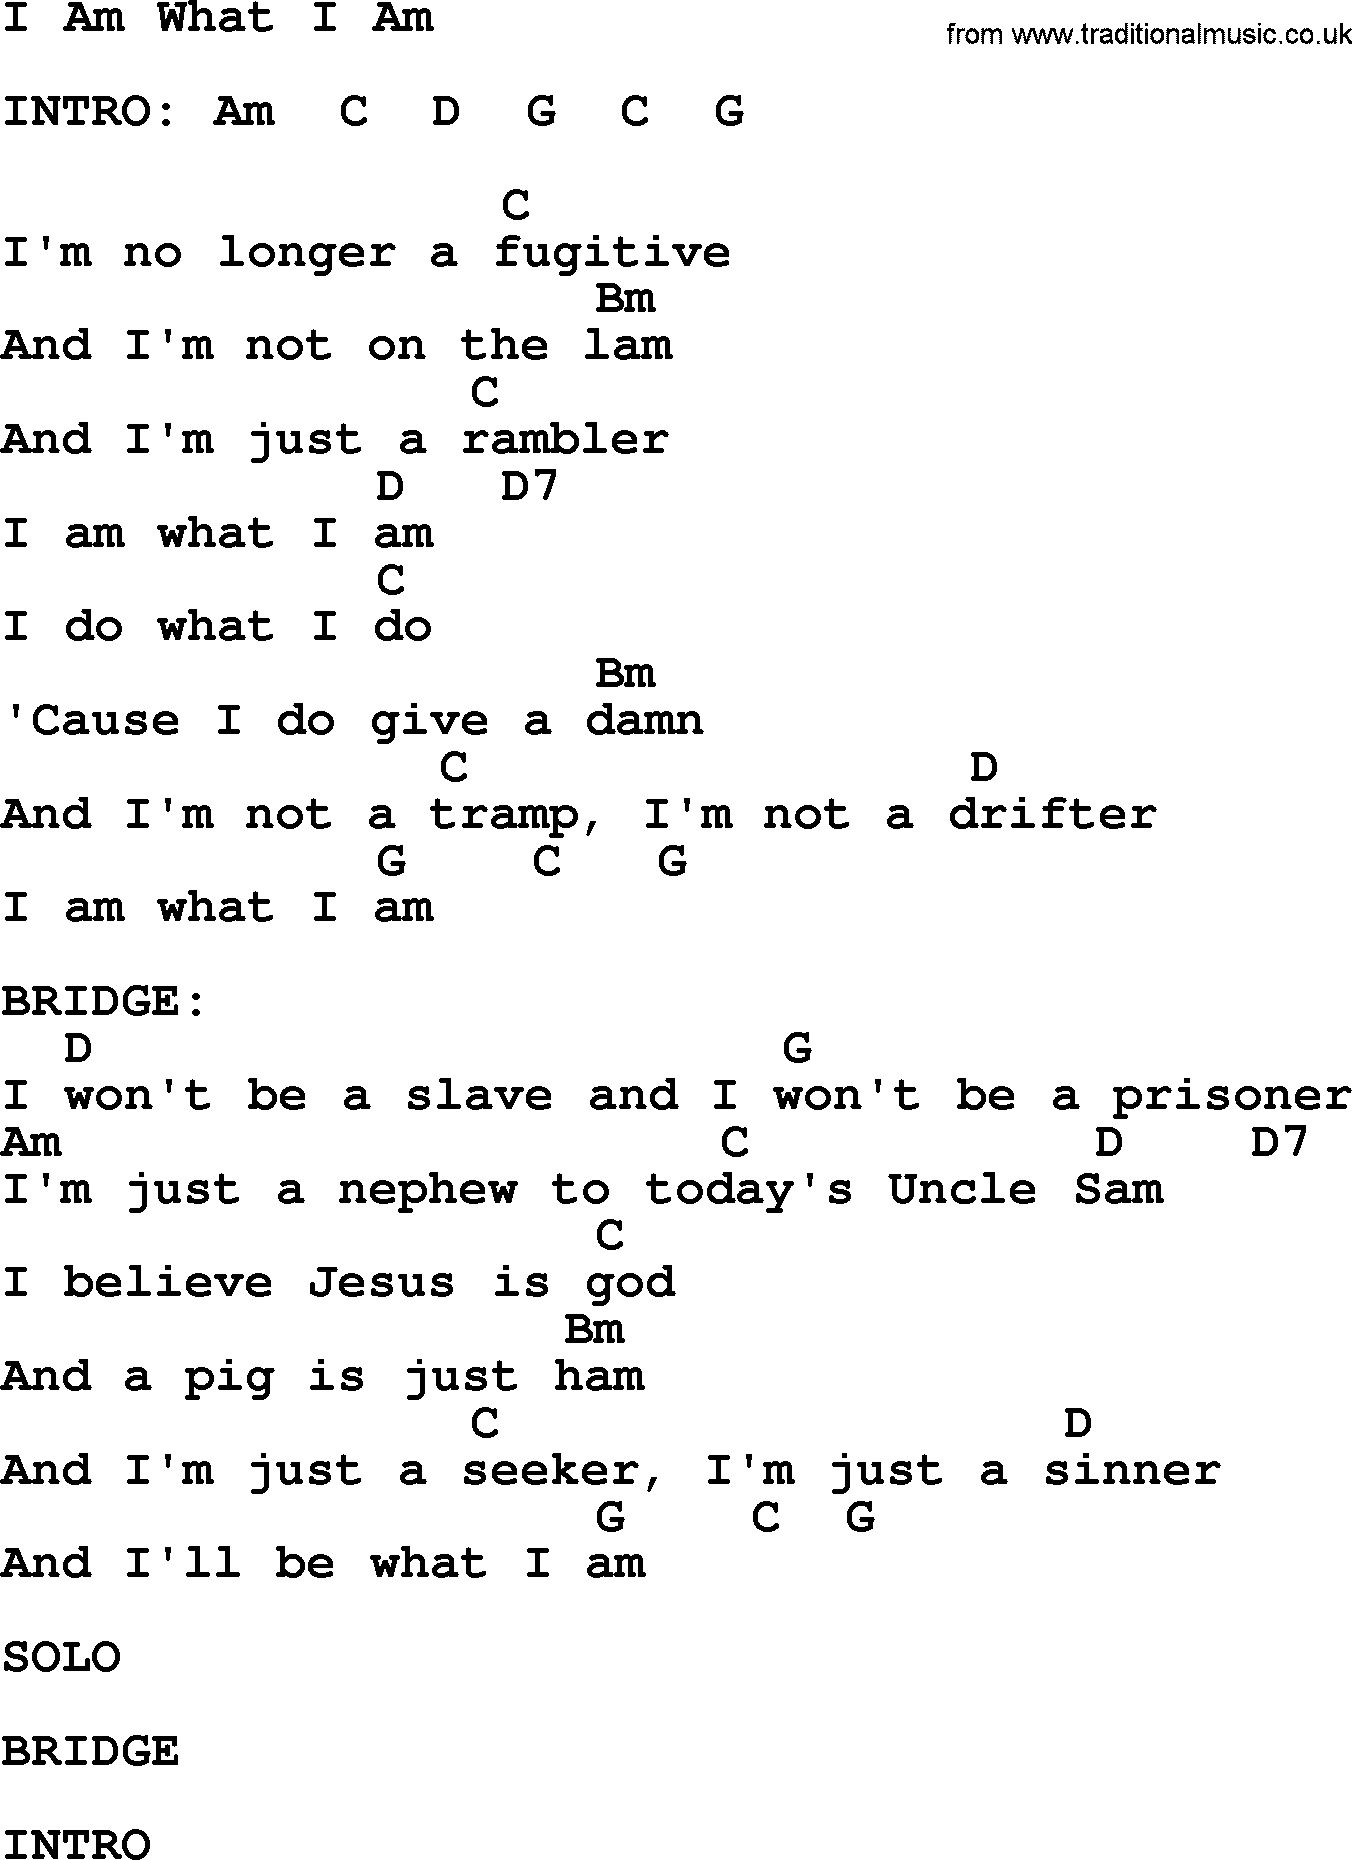 Merle Haggard song: I Am What I Am, lyrics and chords